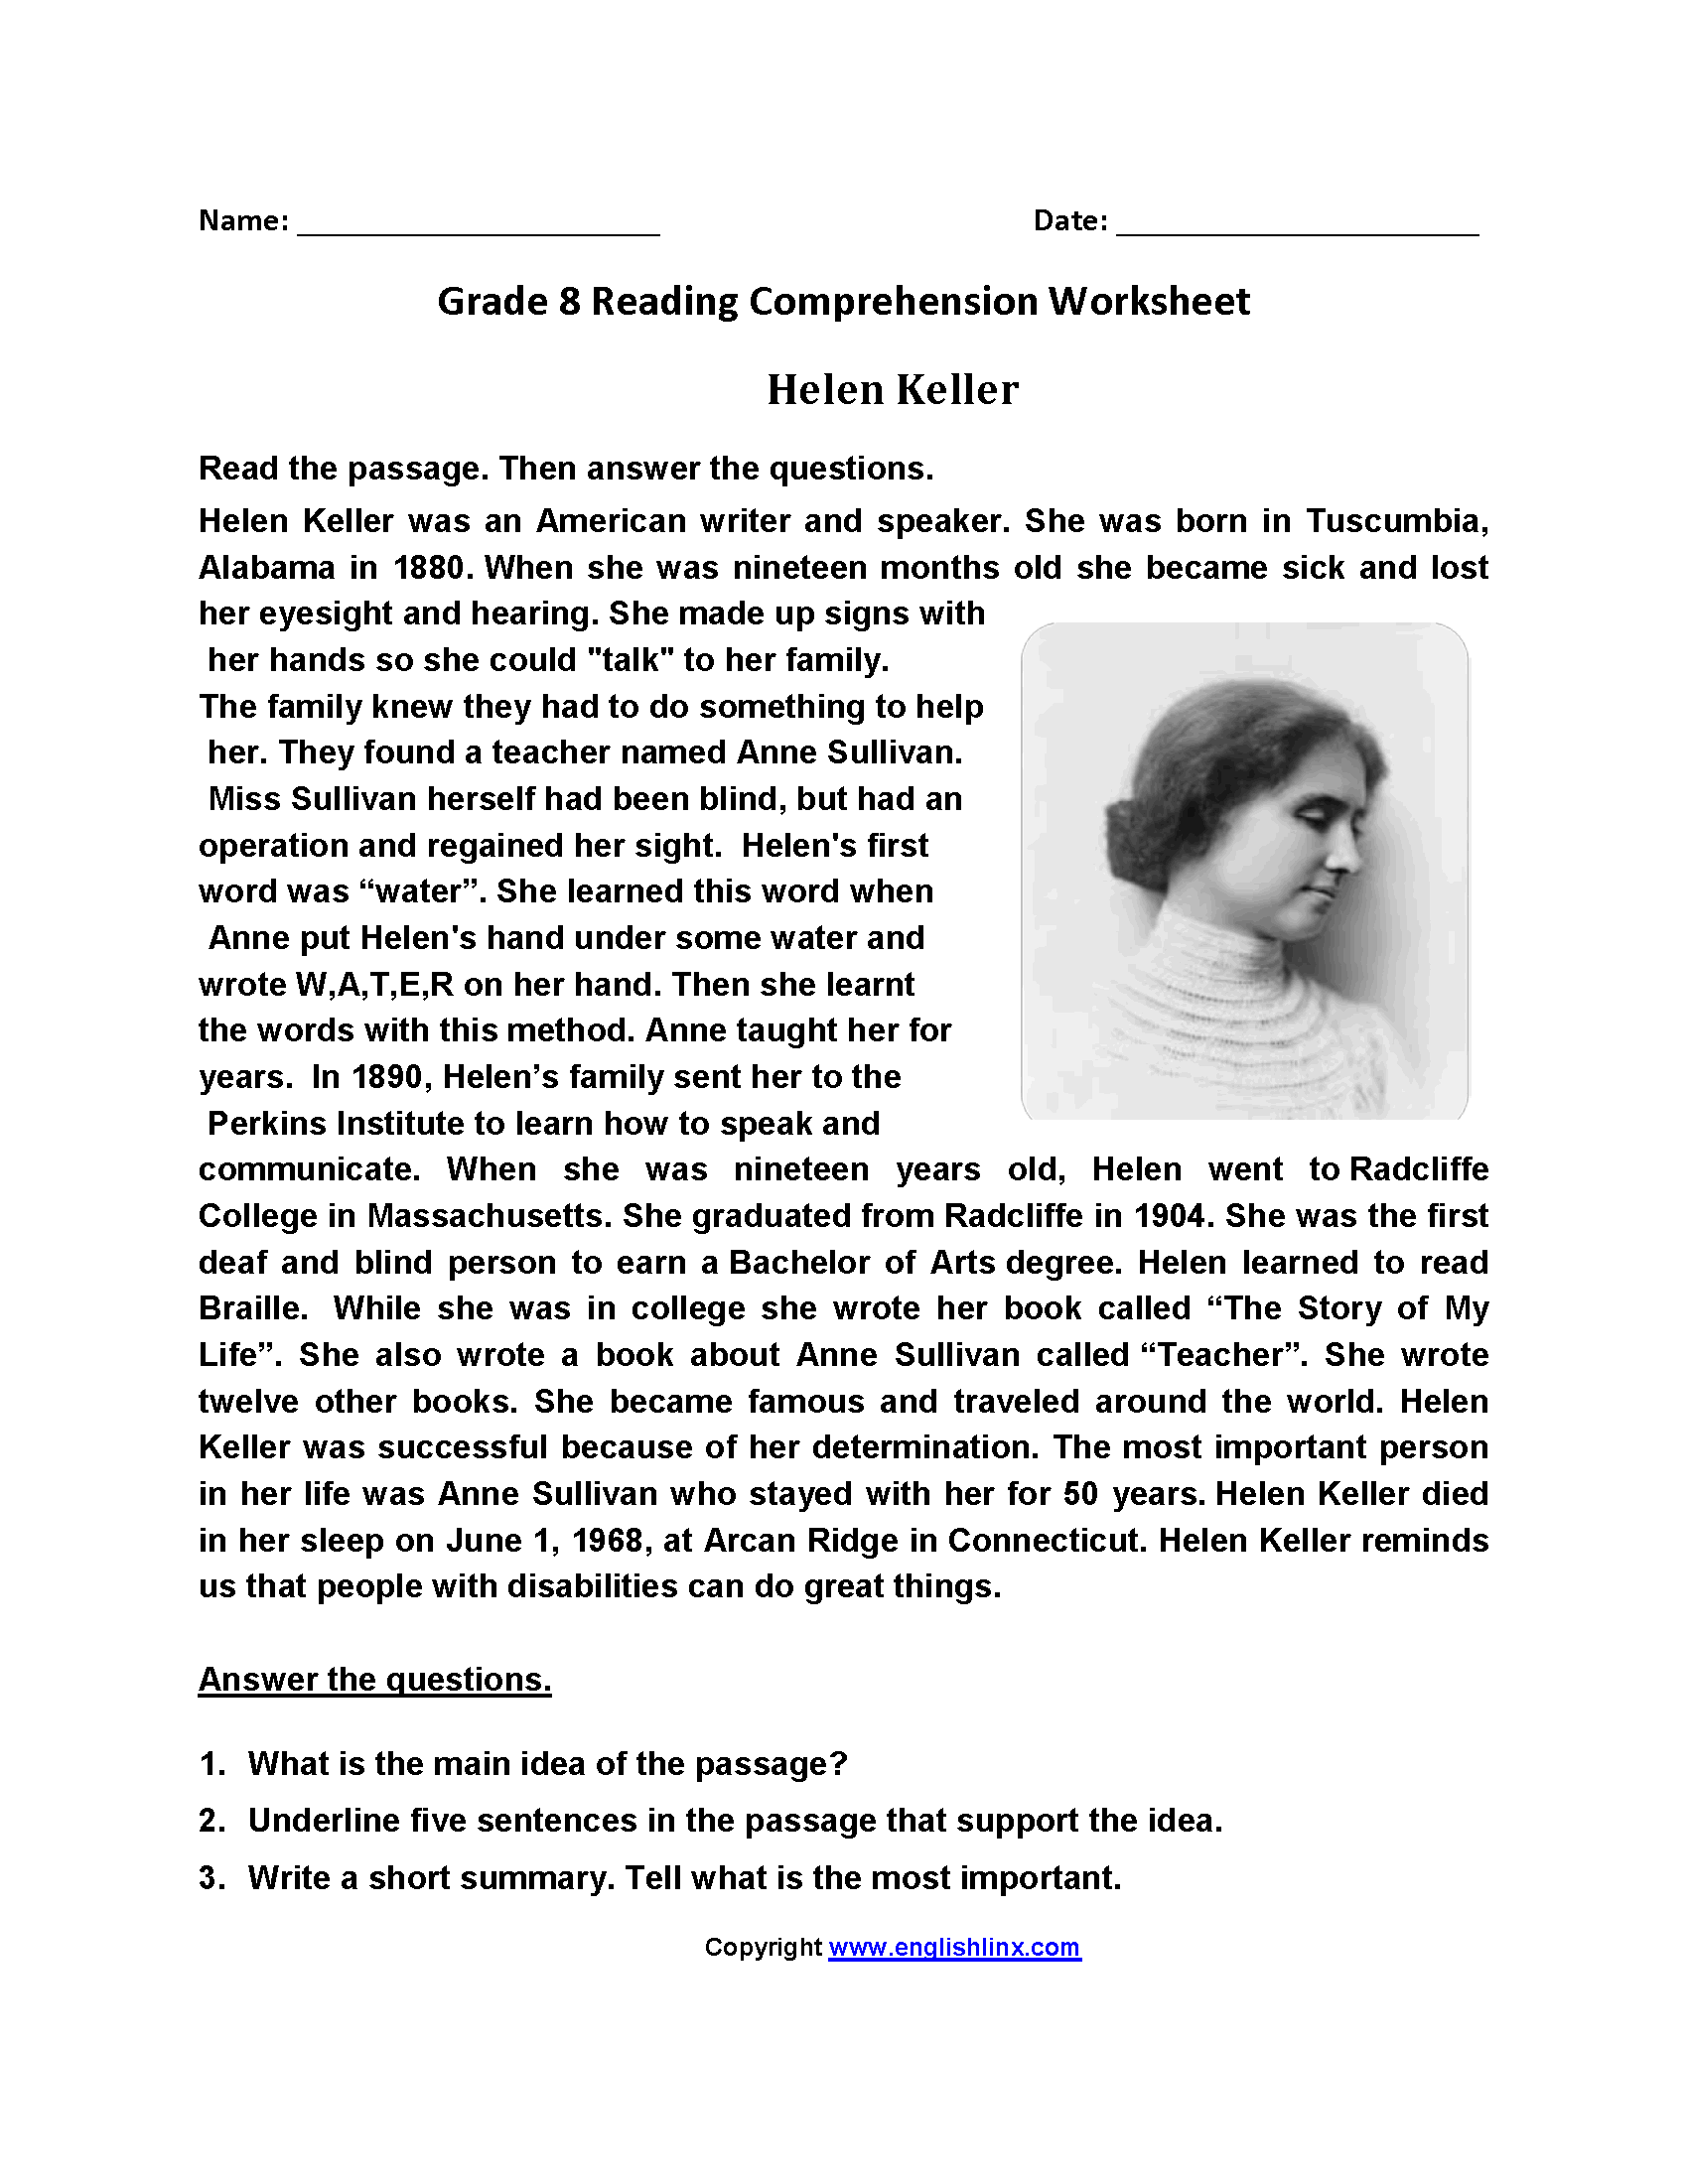 Helen Keller Eighth Grade Reading Worksheets Reading Worksheets